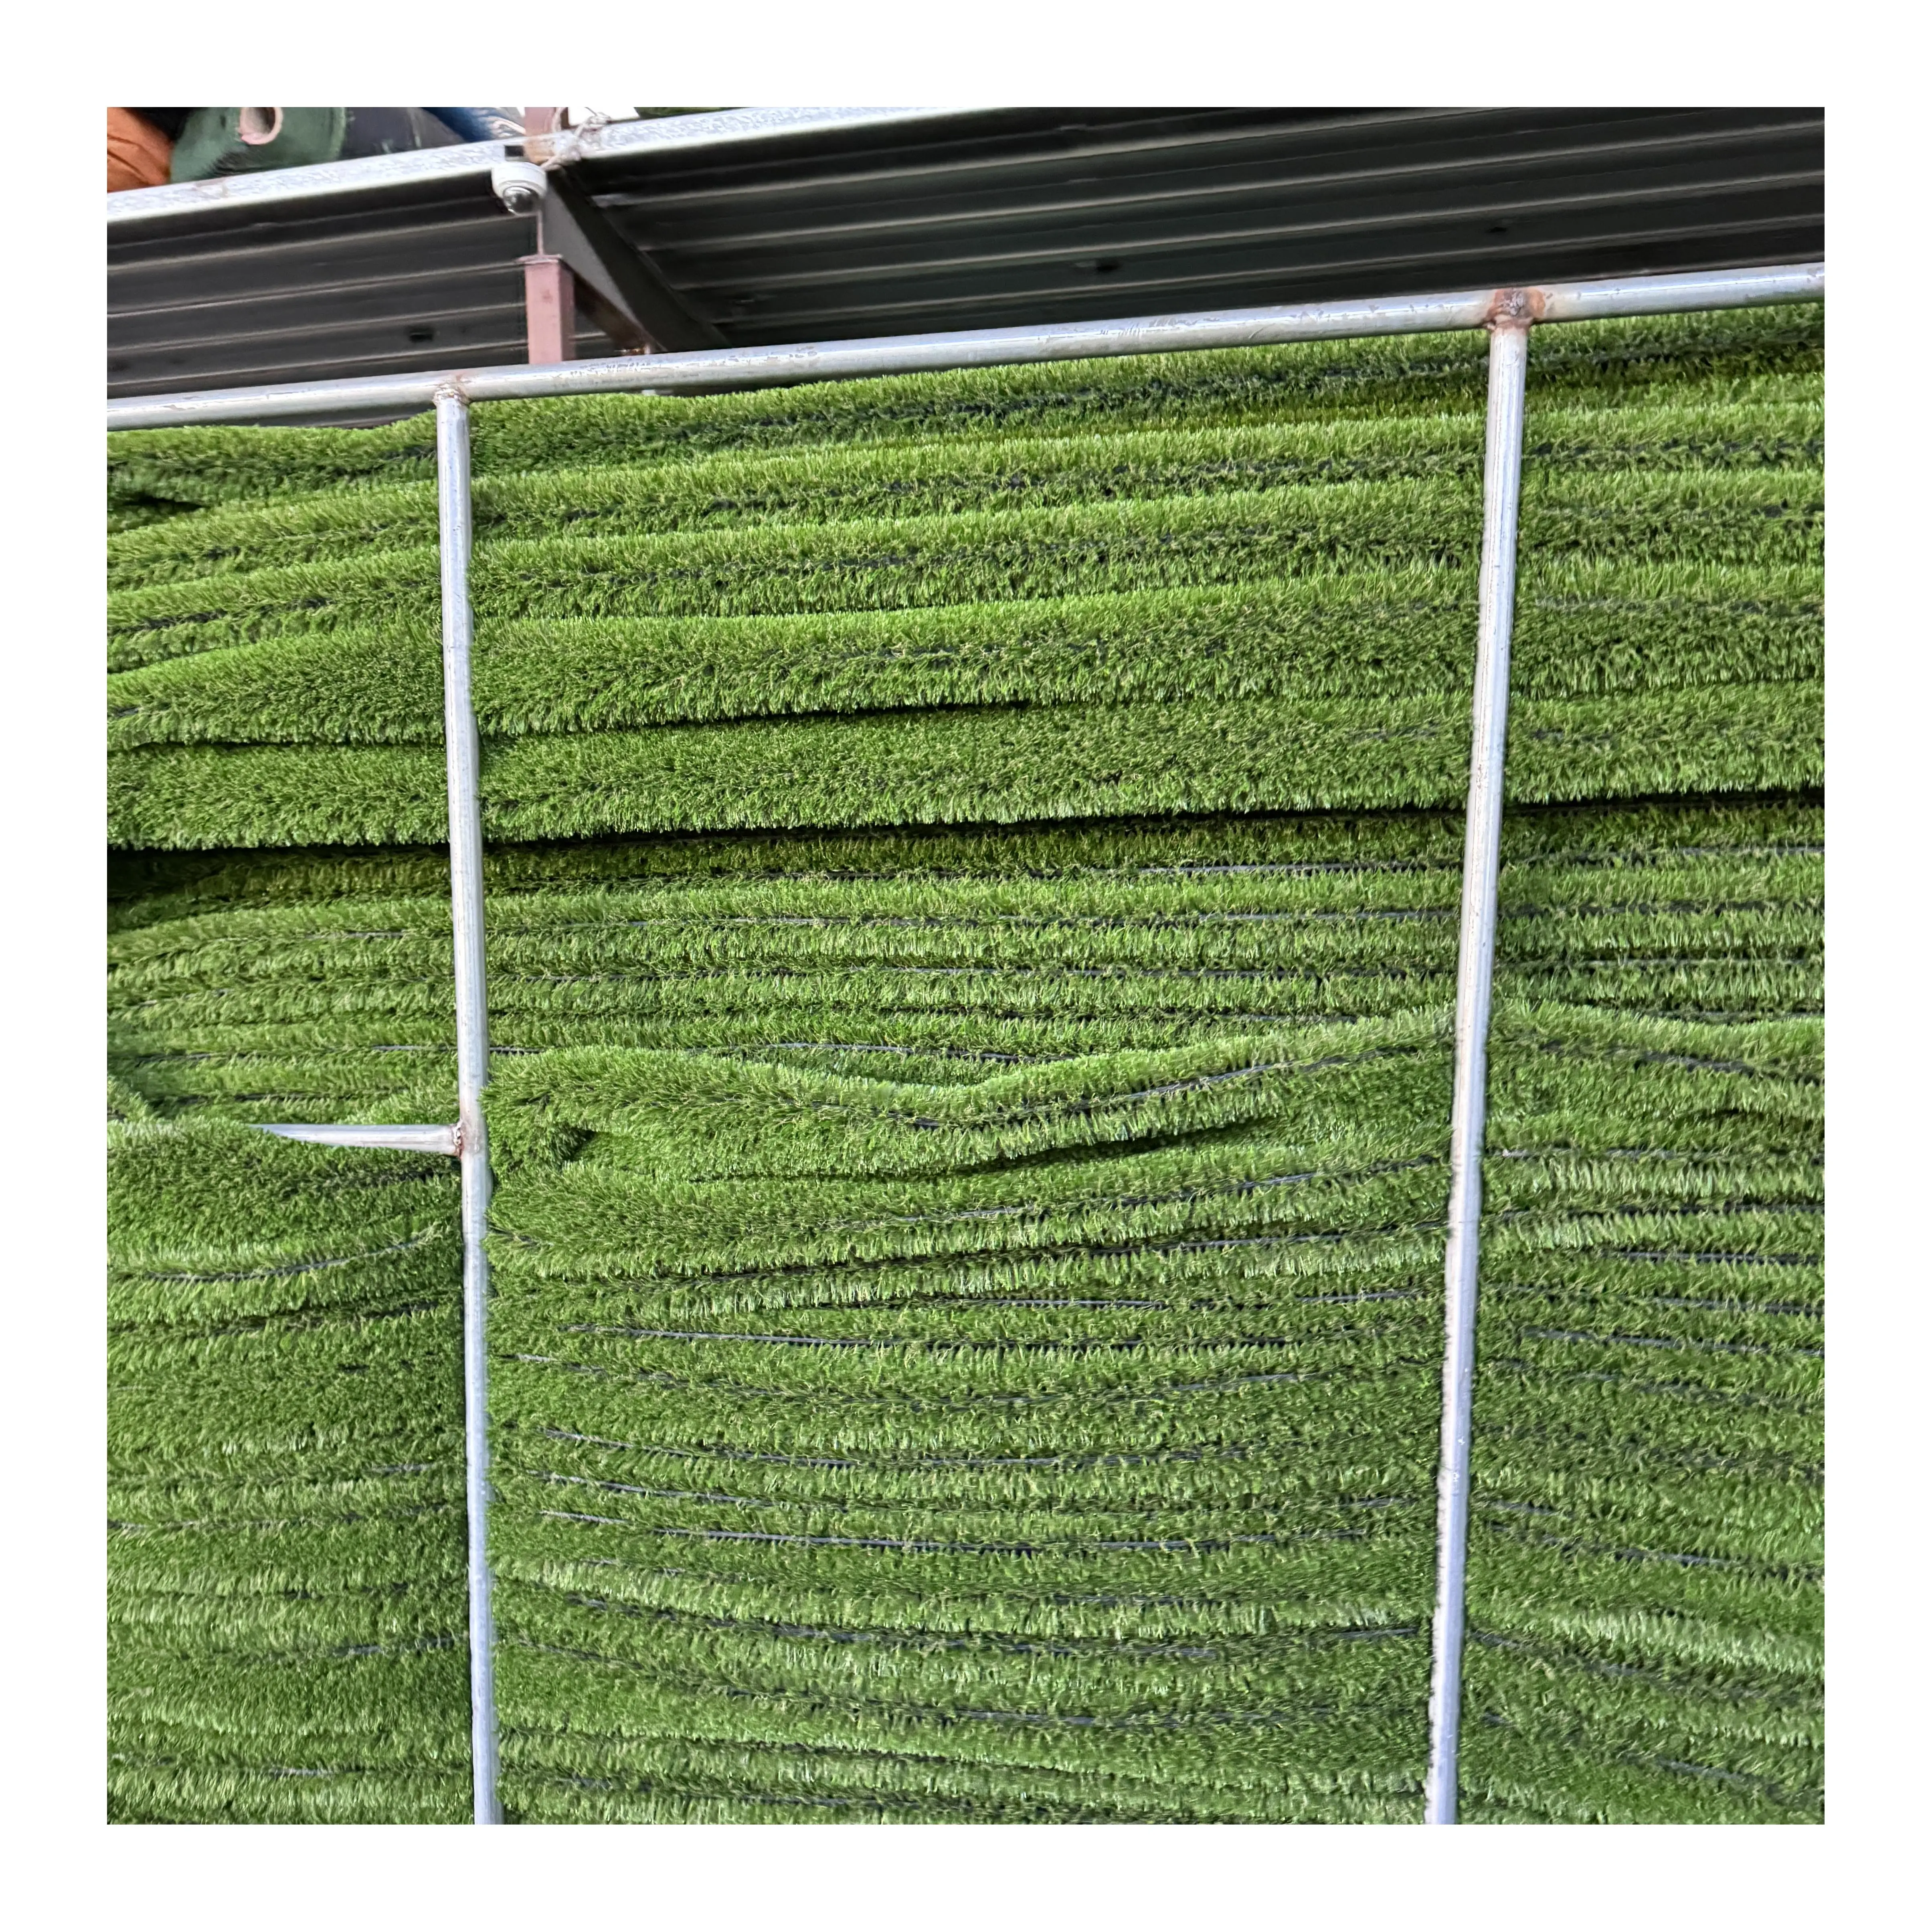 JS Long-Lasting Artificial Green Grass Carpet Sport Artificial Turf Home Garden Landscaping Superior Quality Material